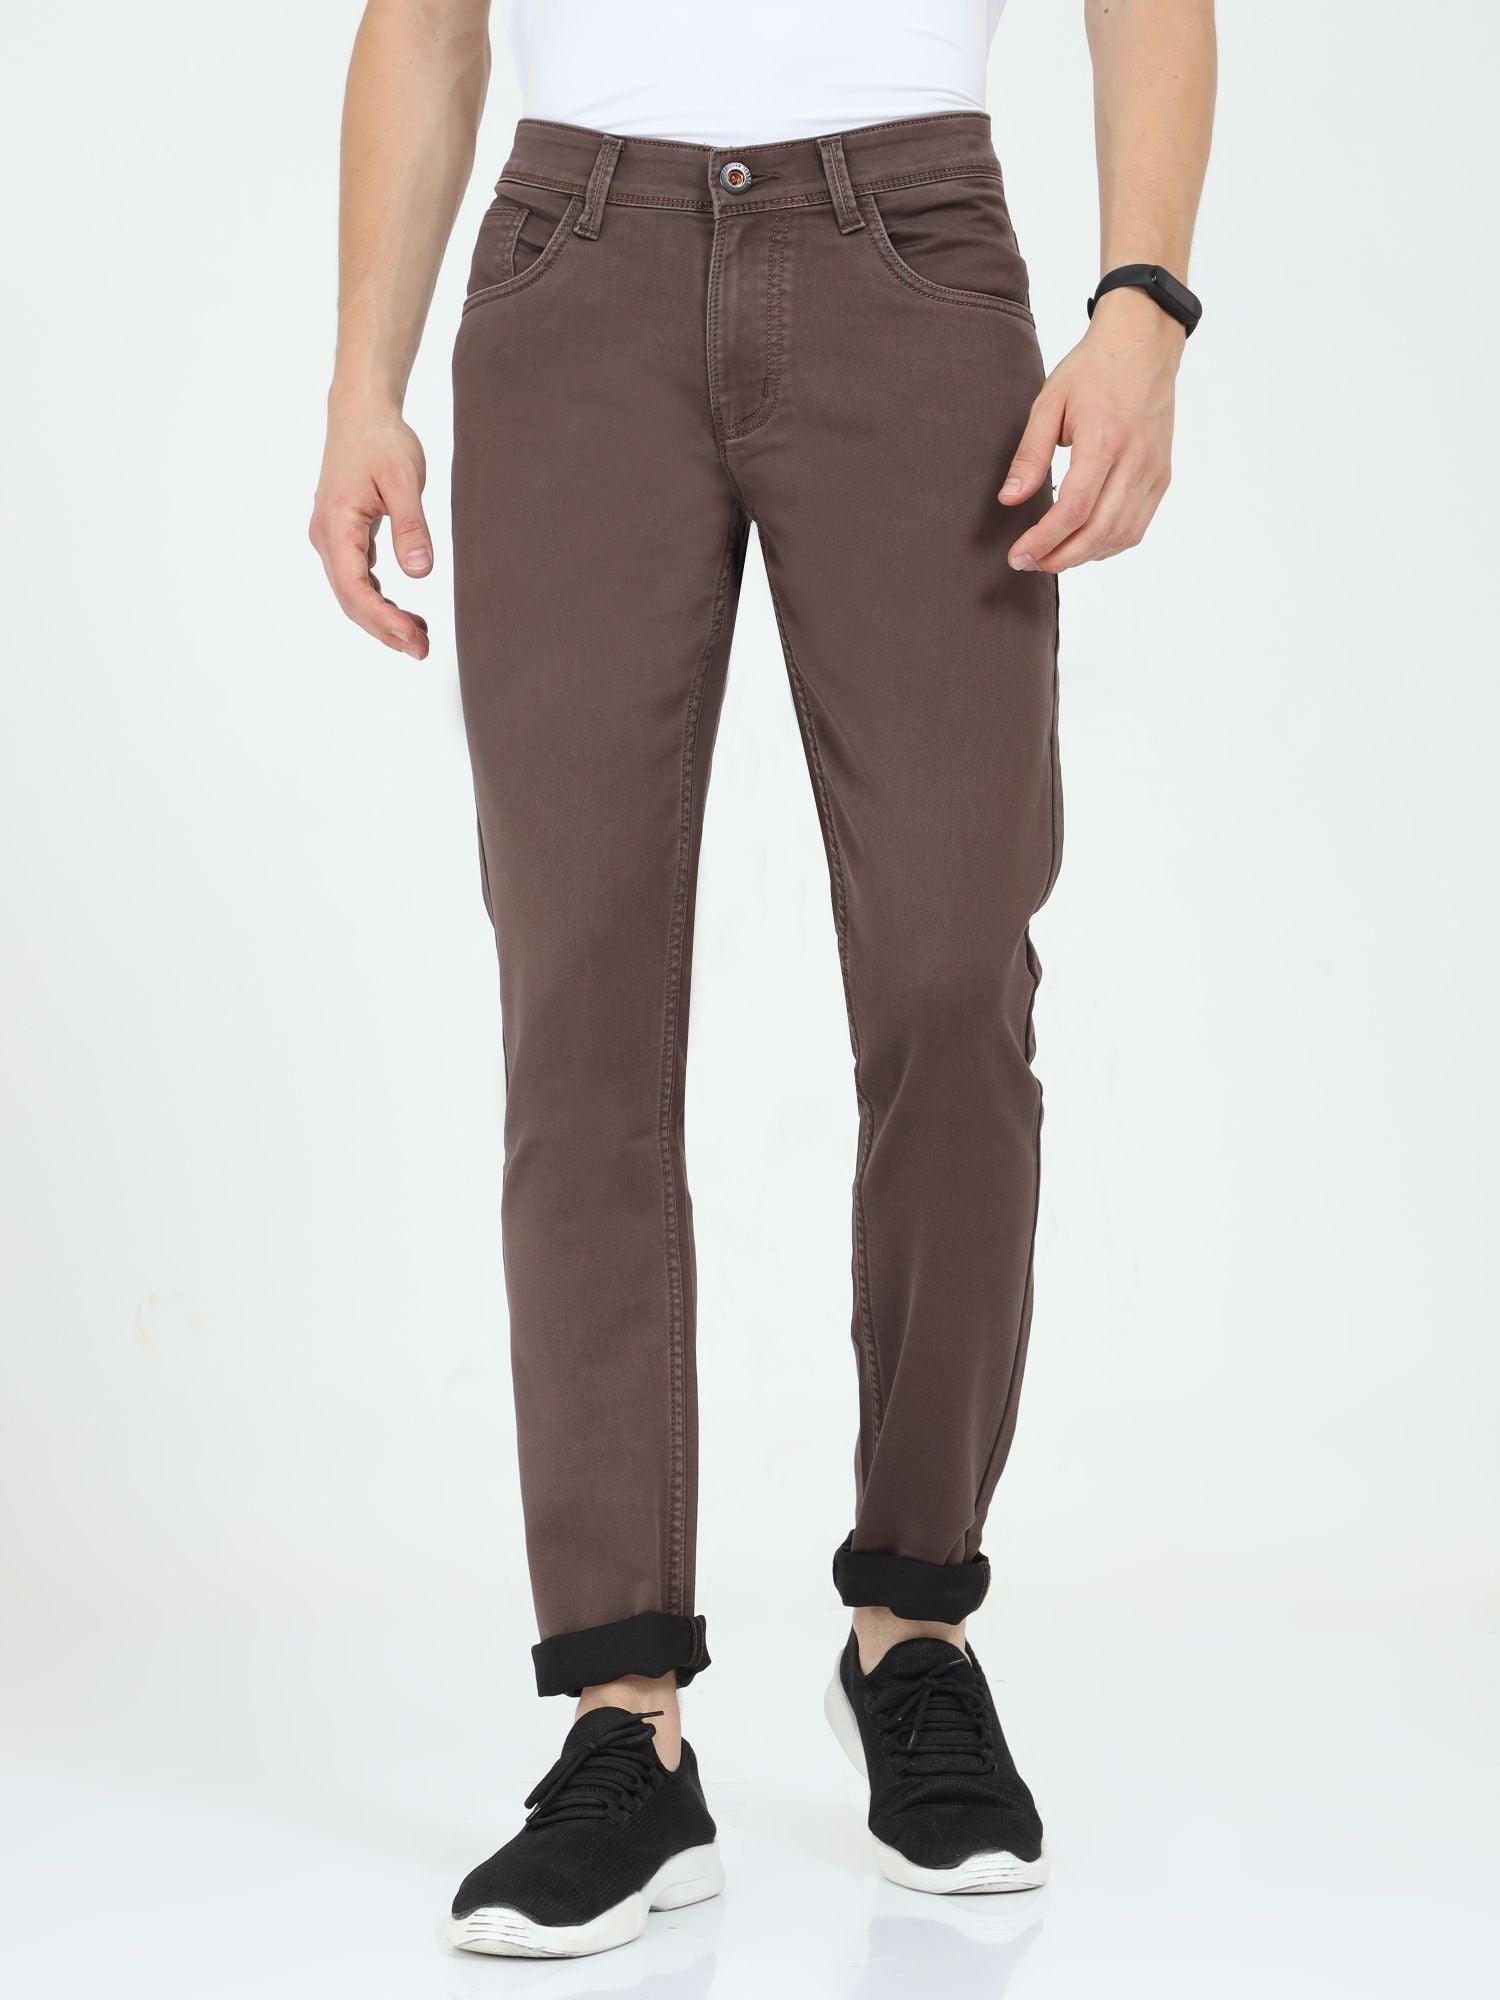 Men's Slim Fit Jeans - Brown - Triggerjeans